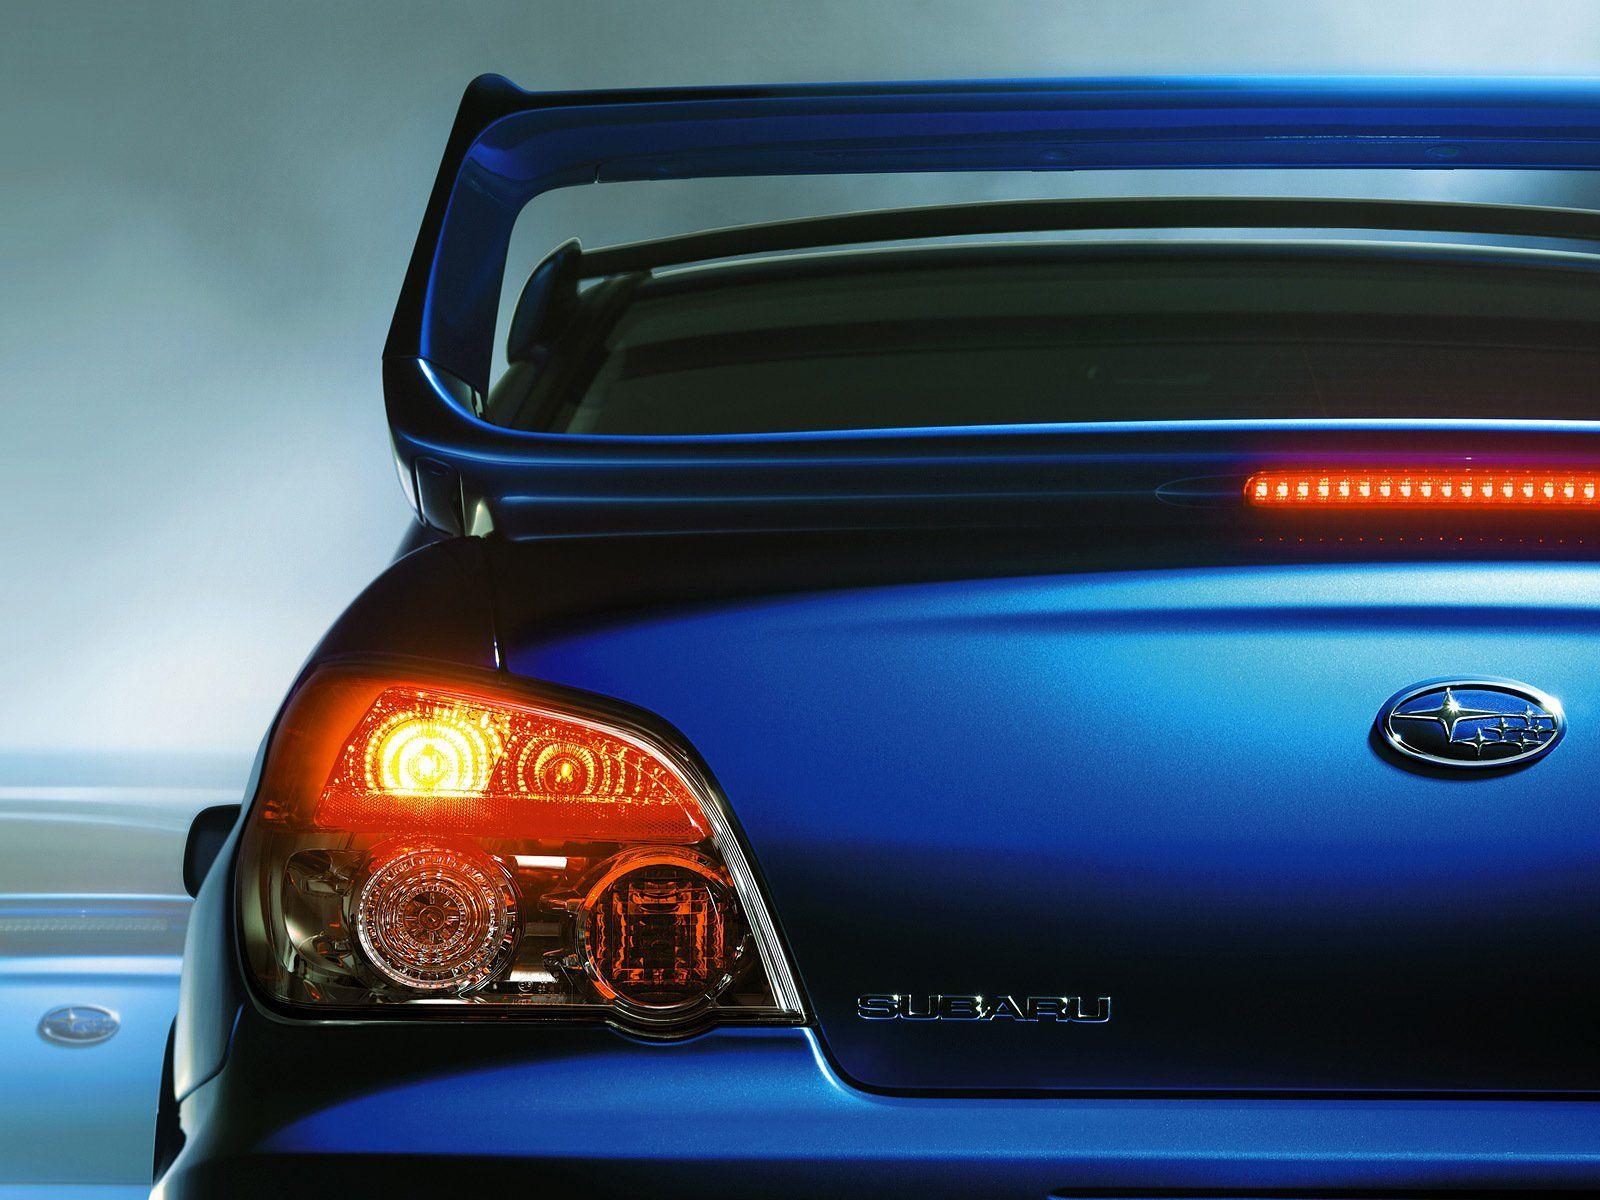 Subaru HD Wallpaper and Background Image